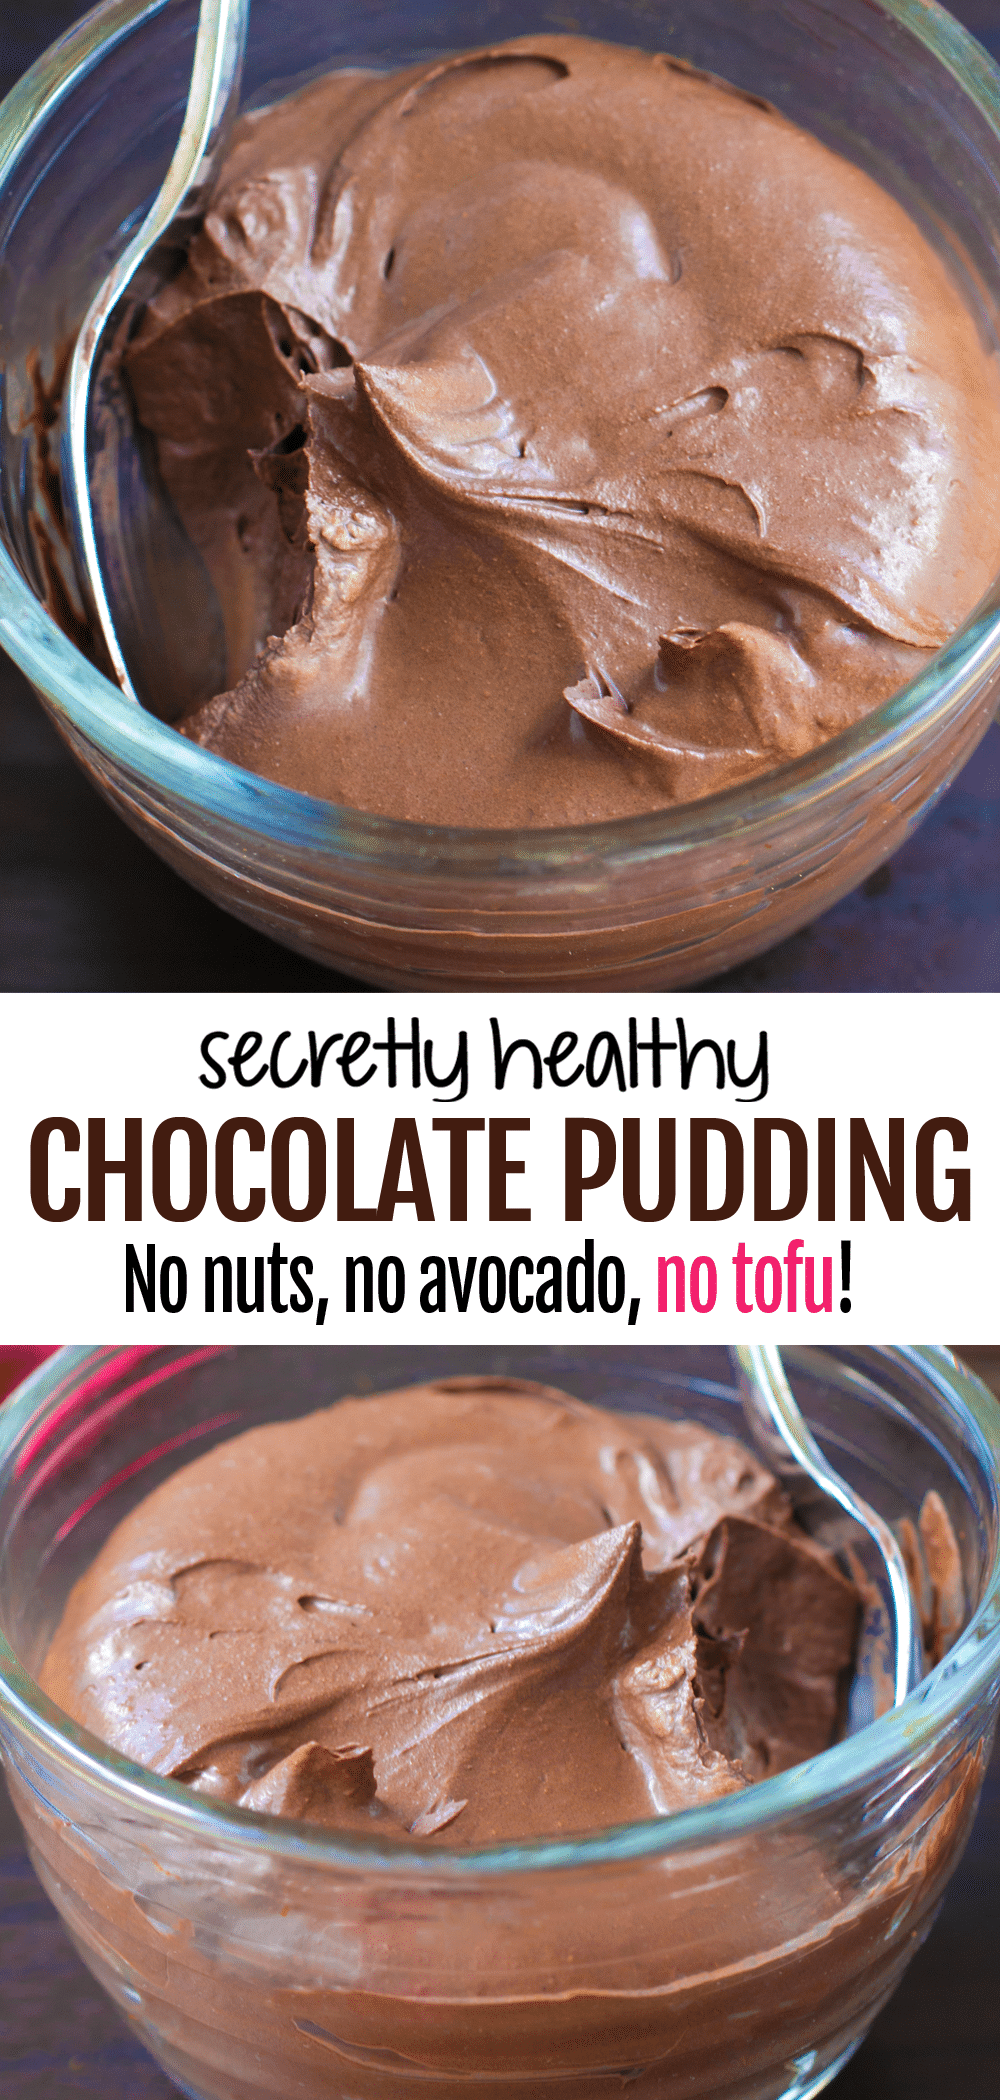 Healthy Chocolate Pudding - 6 Ingredients + NO Avocado!